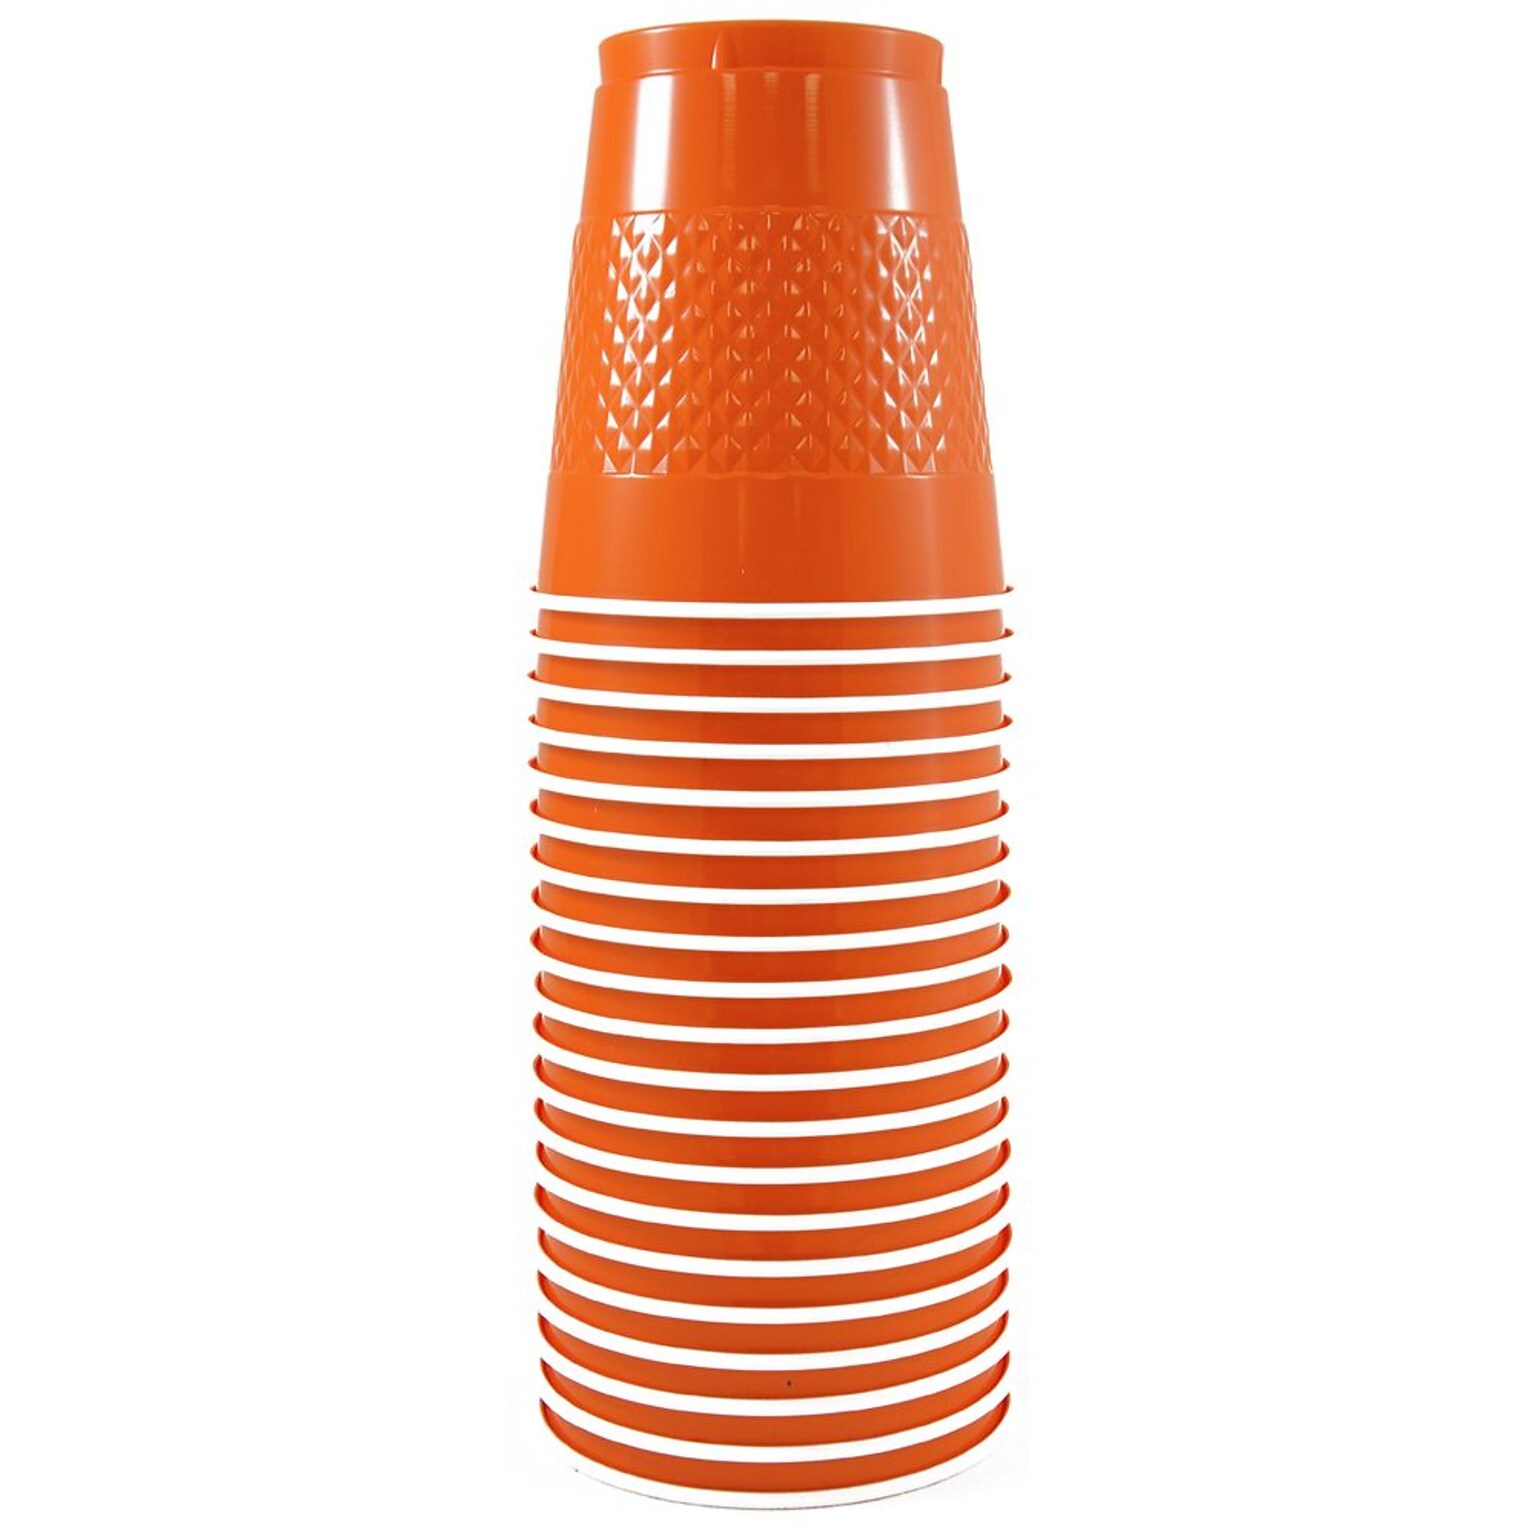 JAM Paper Plastic Party Cups, 12 oz, Orange, 20 Glasses/Pack (2255520706)